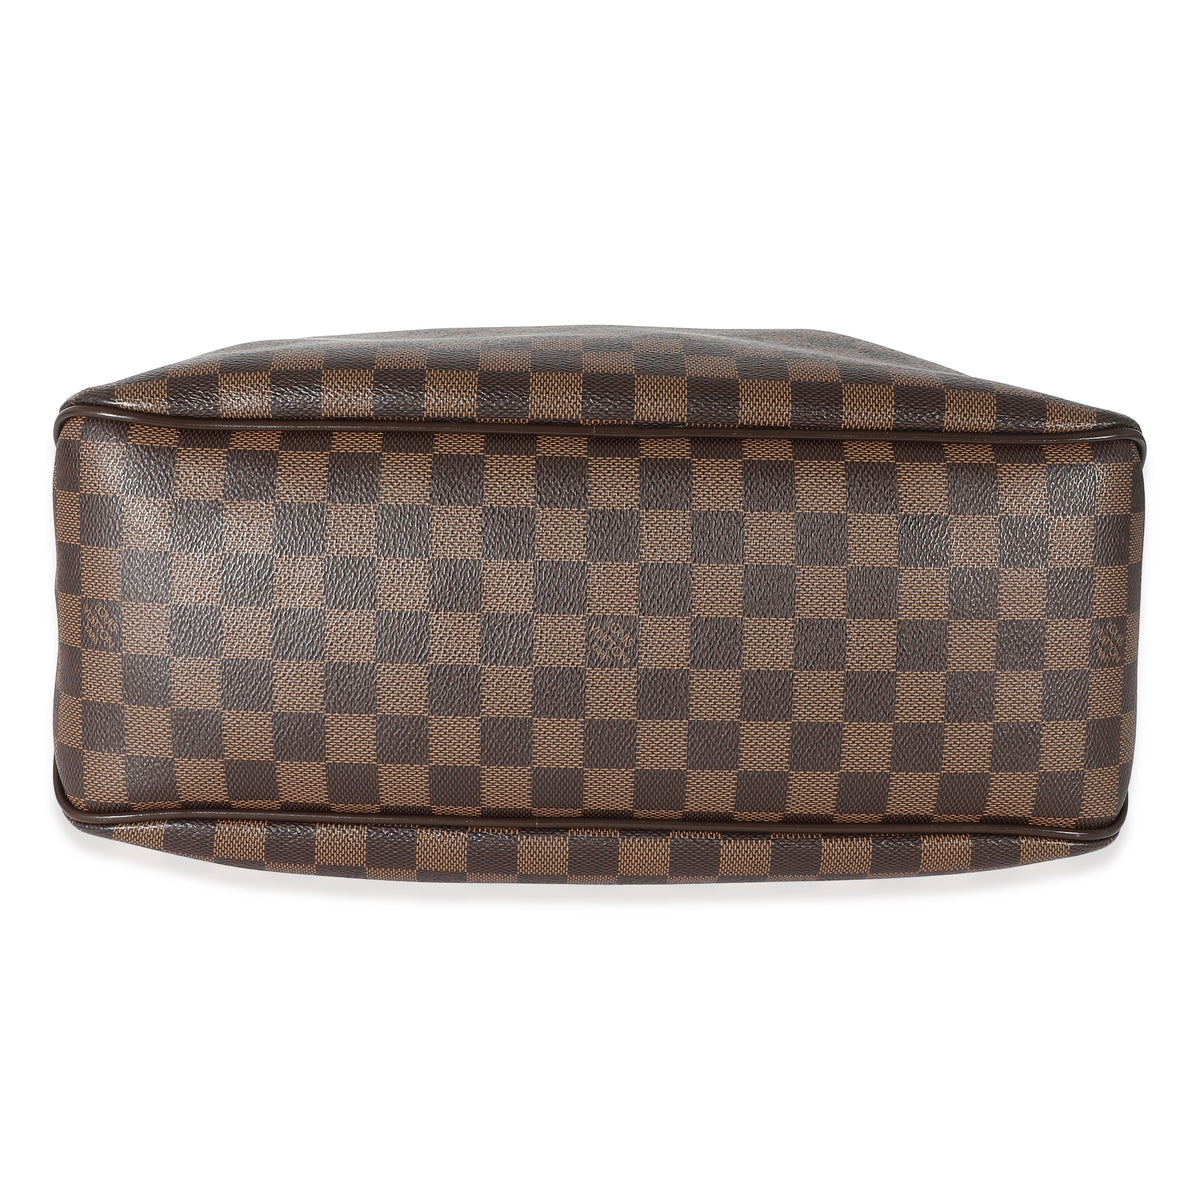 Louis Vuitton Damier Ebene Delightful MM - Brown Hobos, Handbags